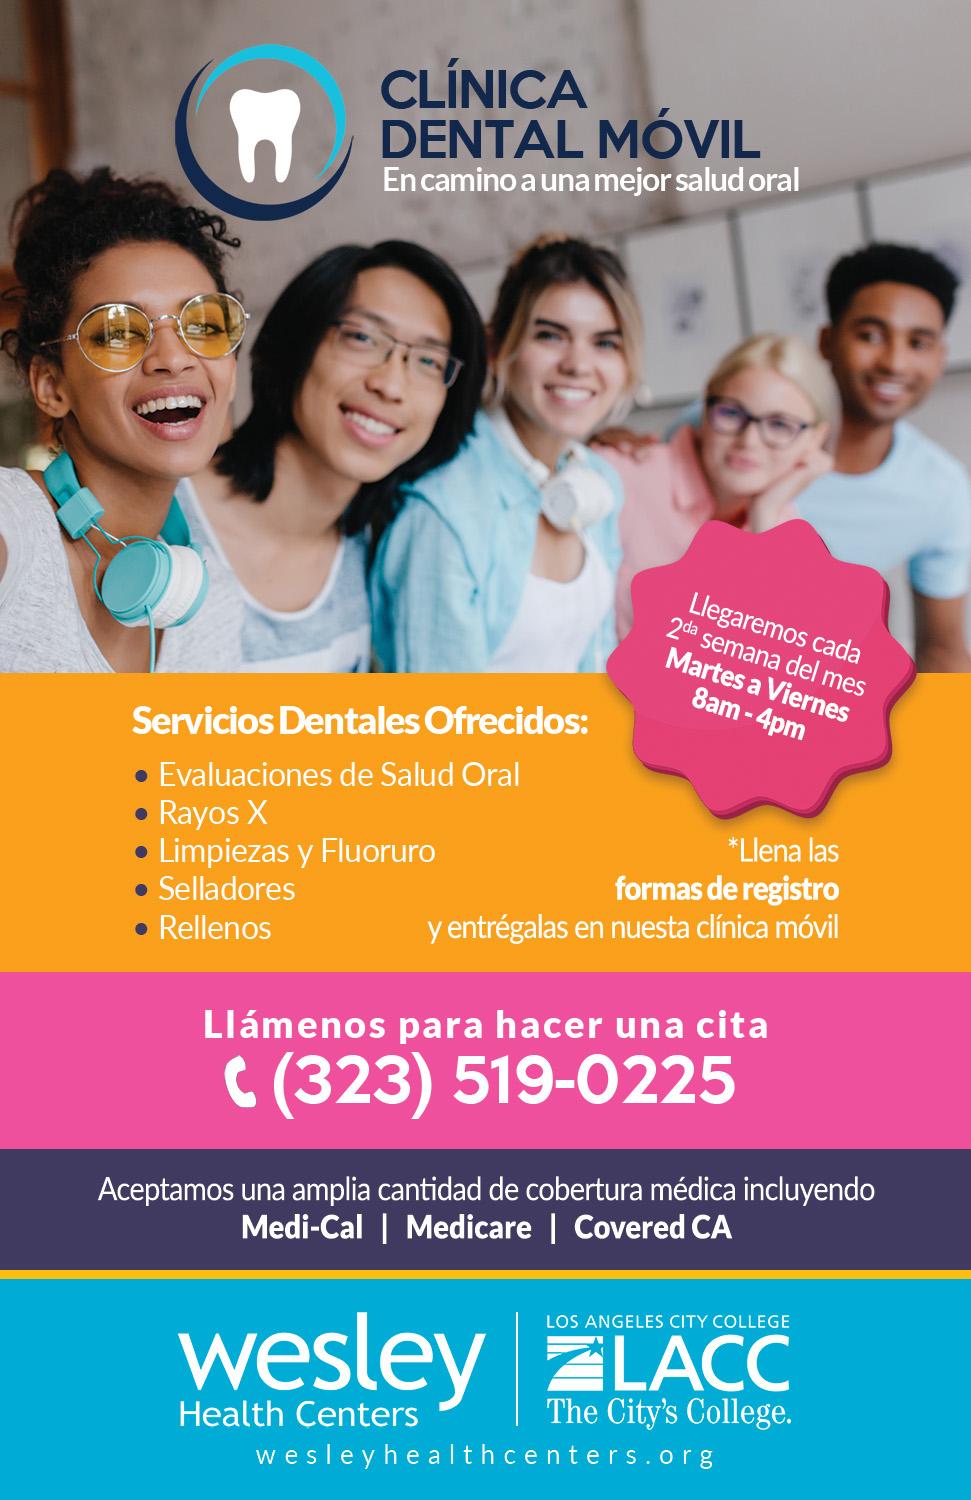 Mobile Dental Unit Services Spanish